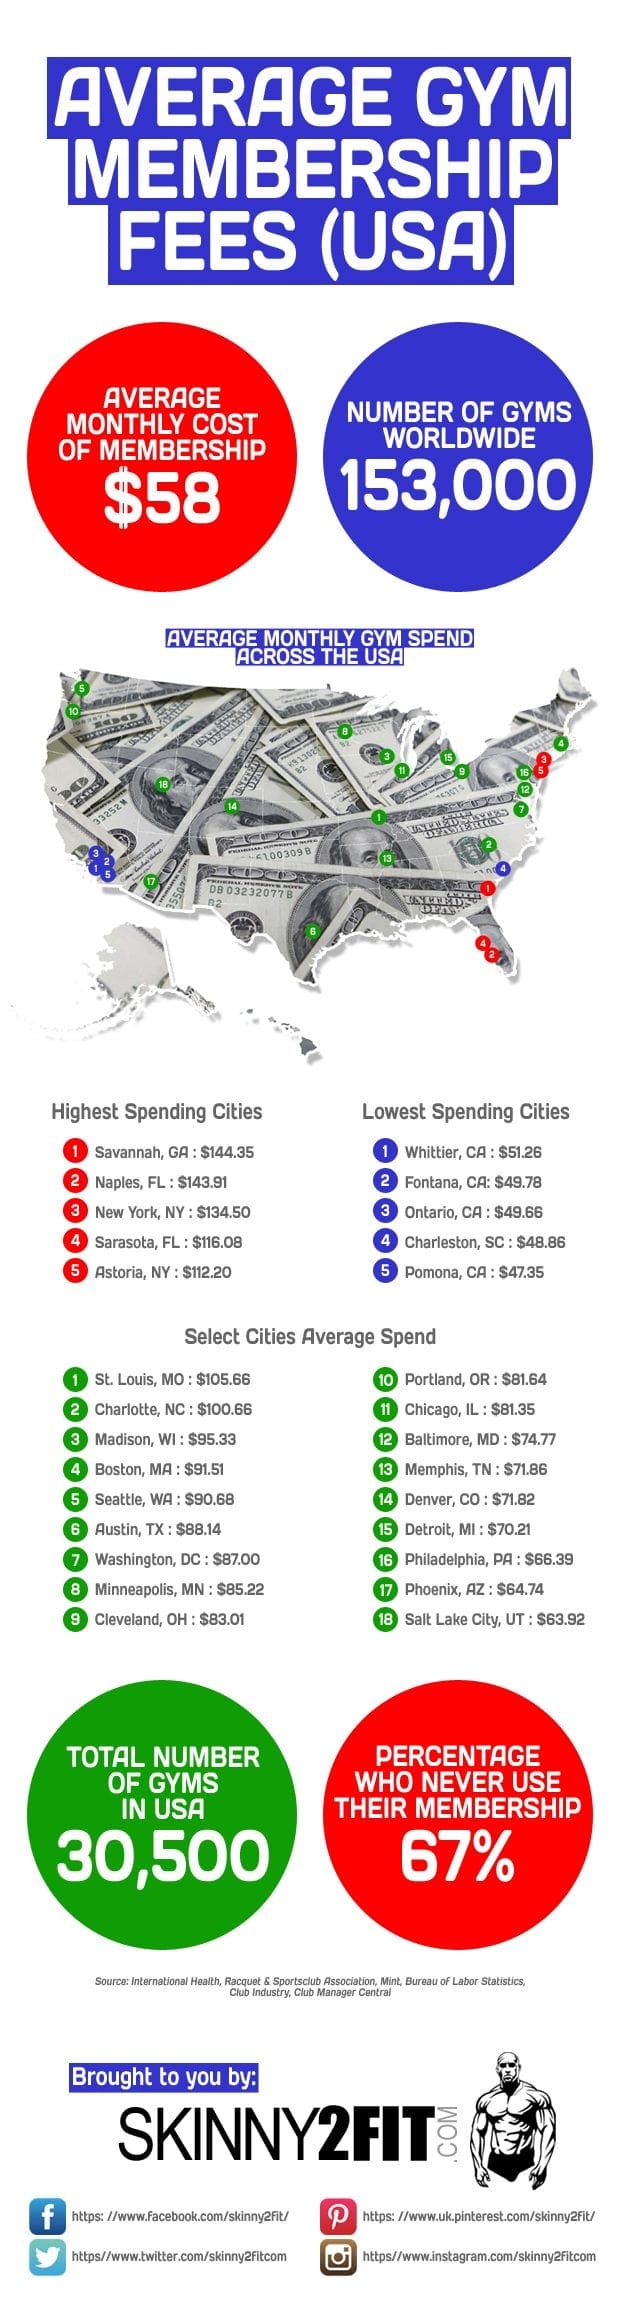 Average Gym Membership Fees (USA) infographic